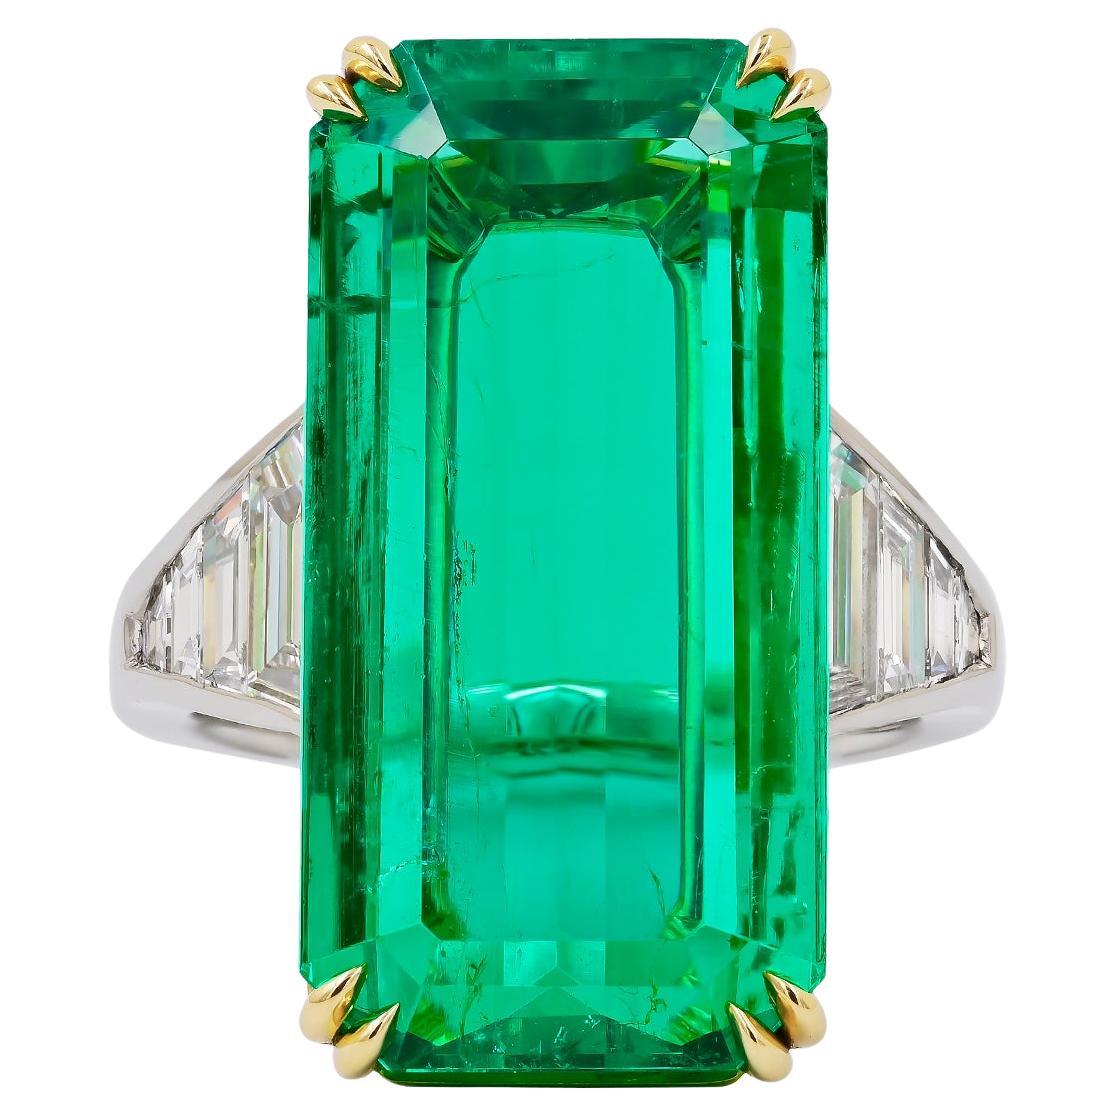 Spectra Fine Jewelry, Certified 15.91 Carat Colombian Emerald Ring